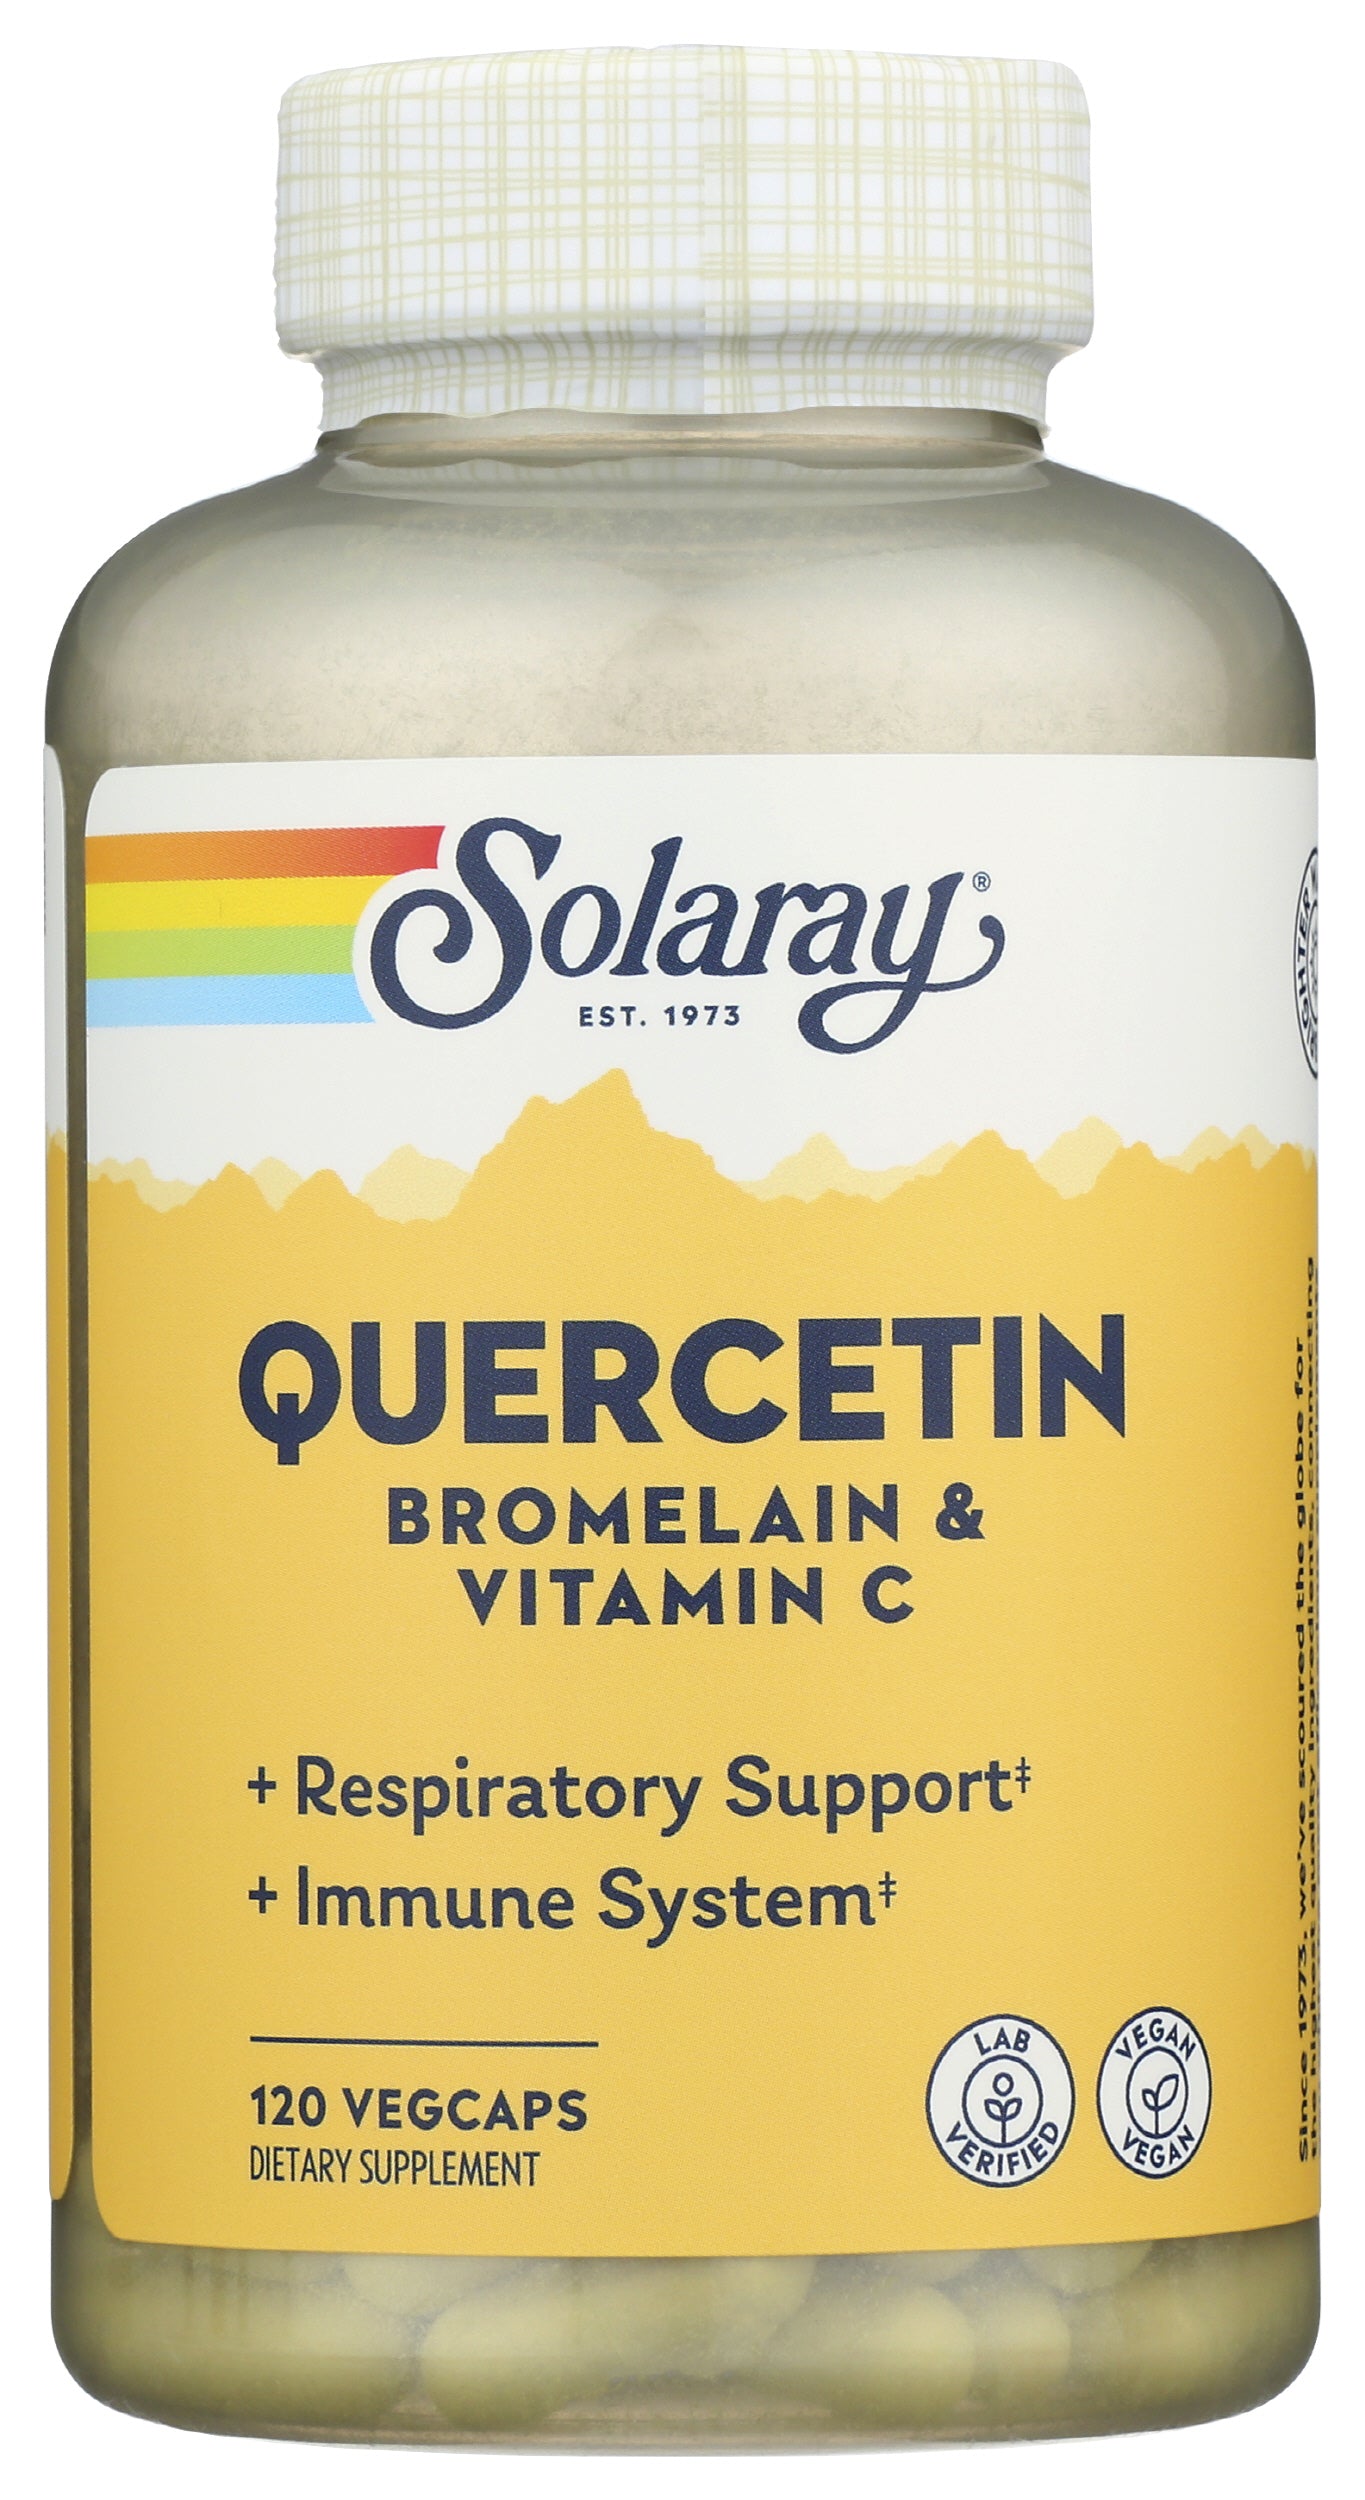 Solaray Quercetin Bromelain & Vitamin C 120 Vegcaps Front of Bottle